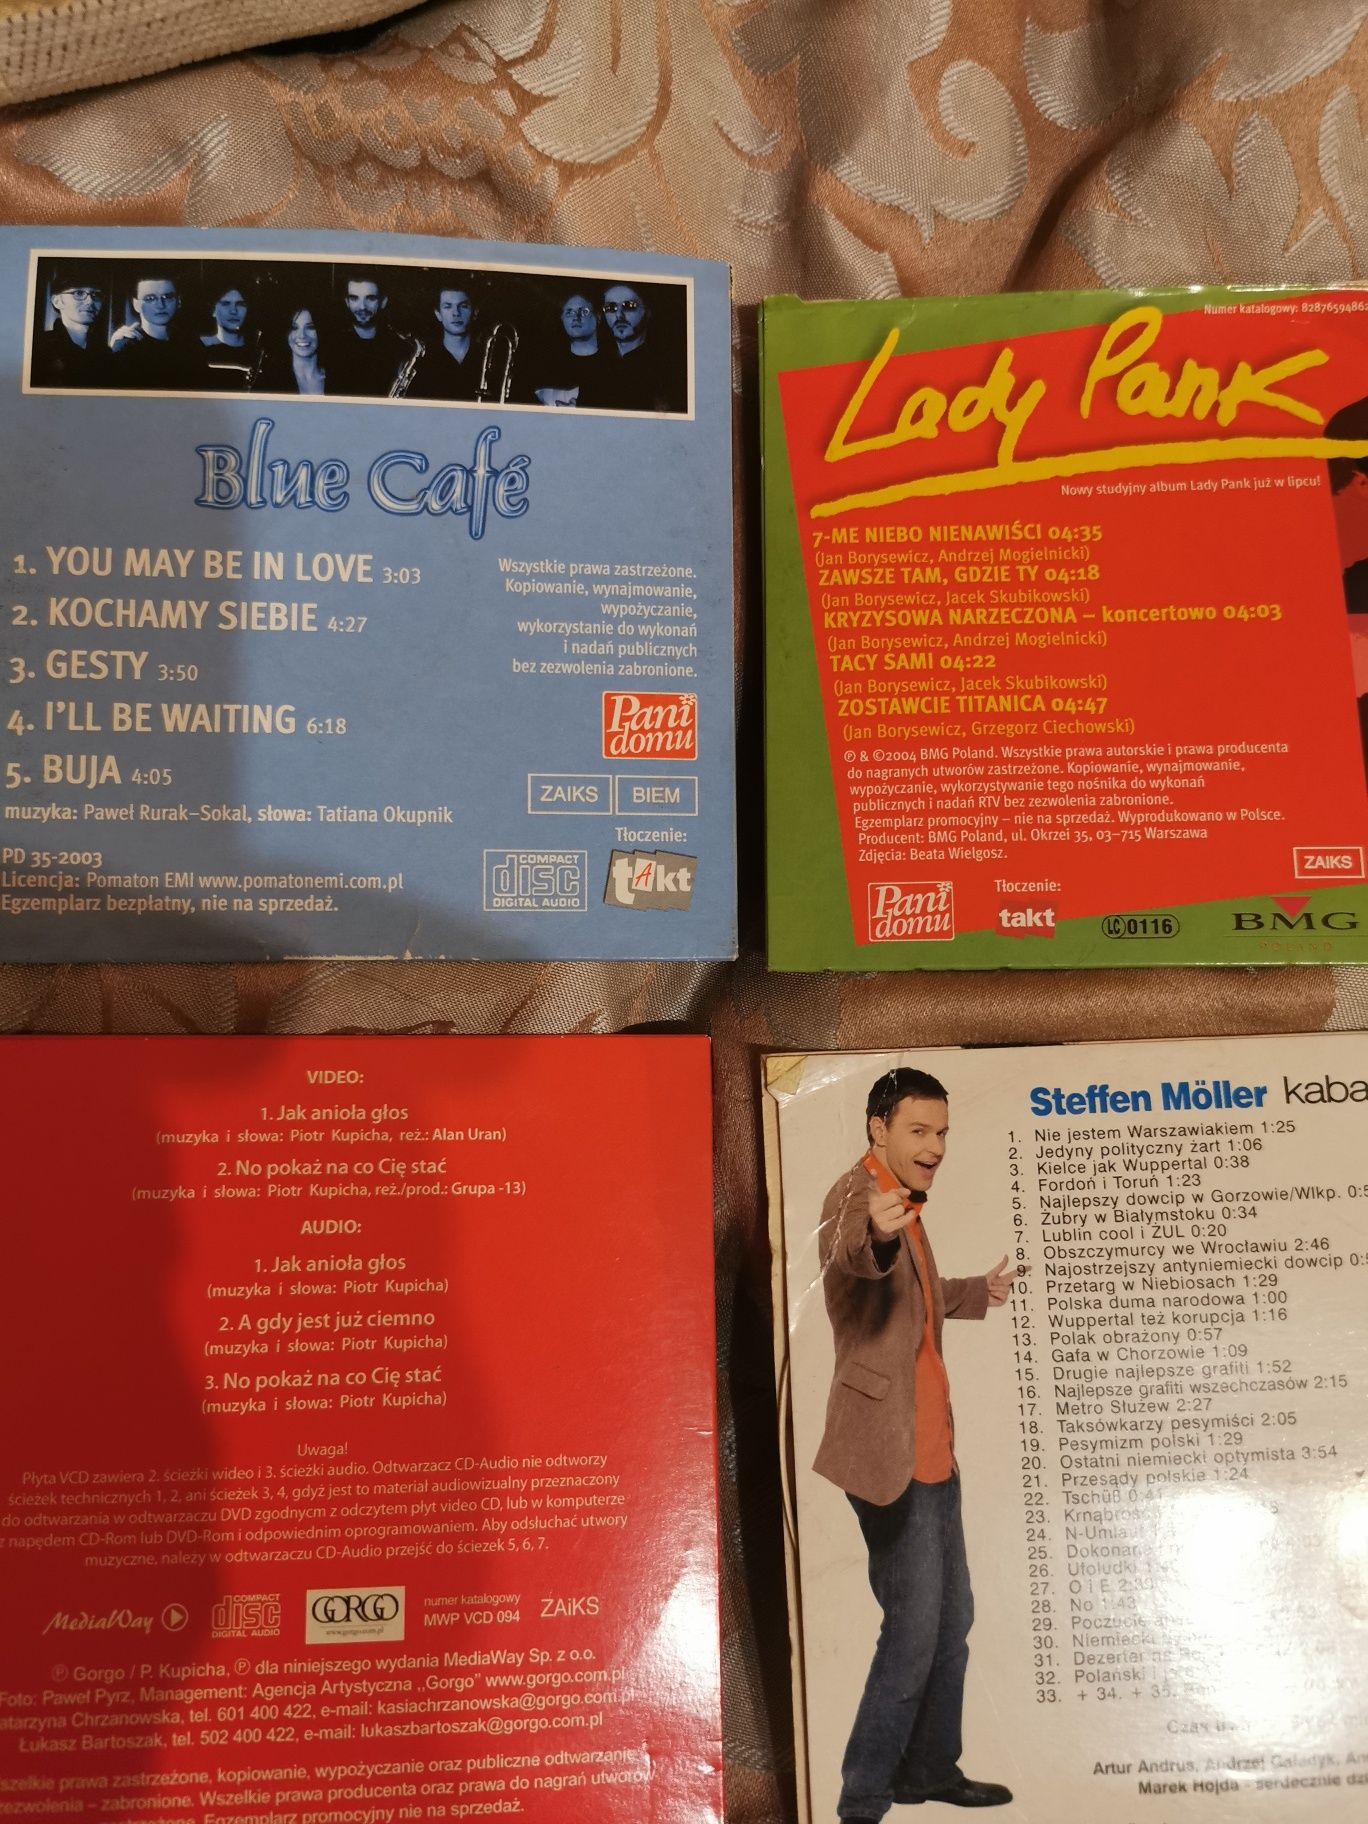 Płyty CD Feel Blue Cafe Lady Pank i kabaret Steffen Moller